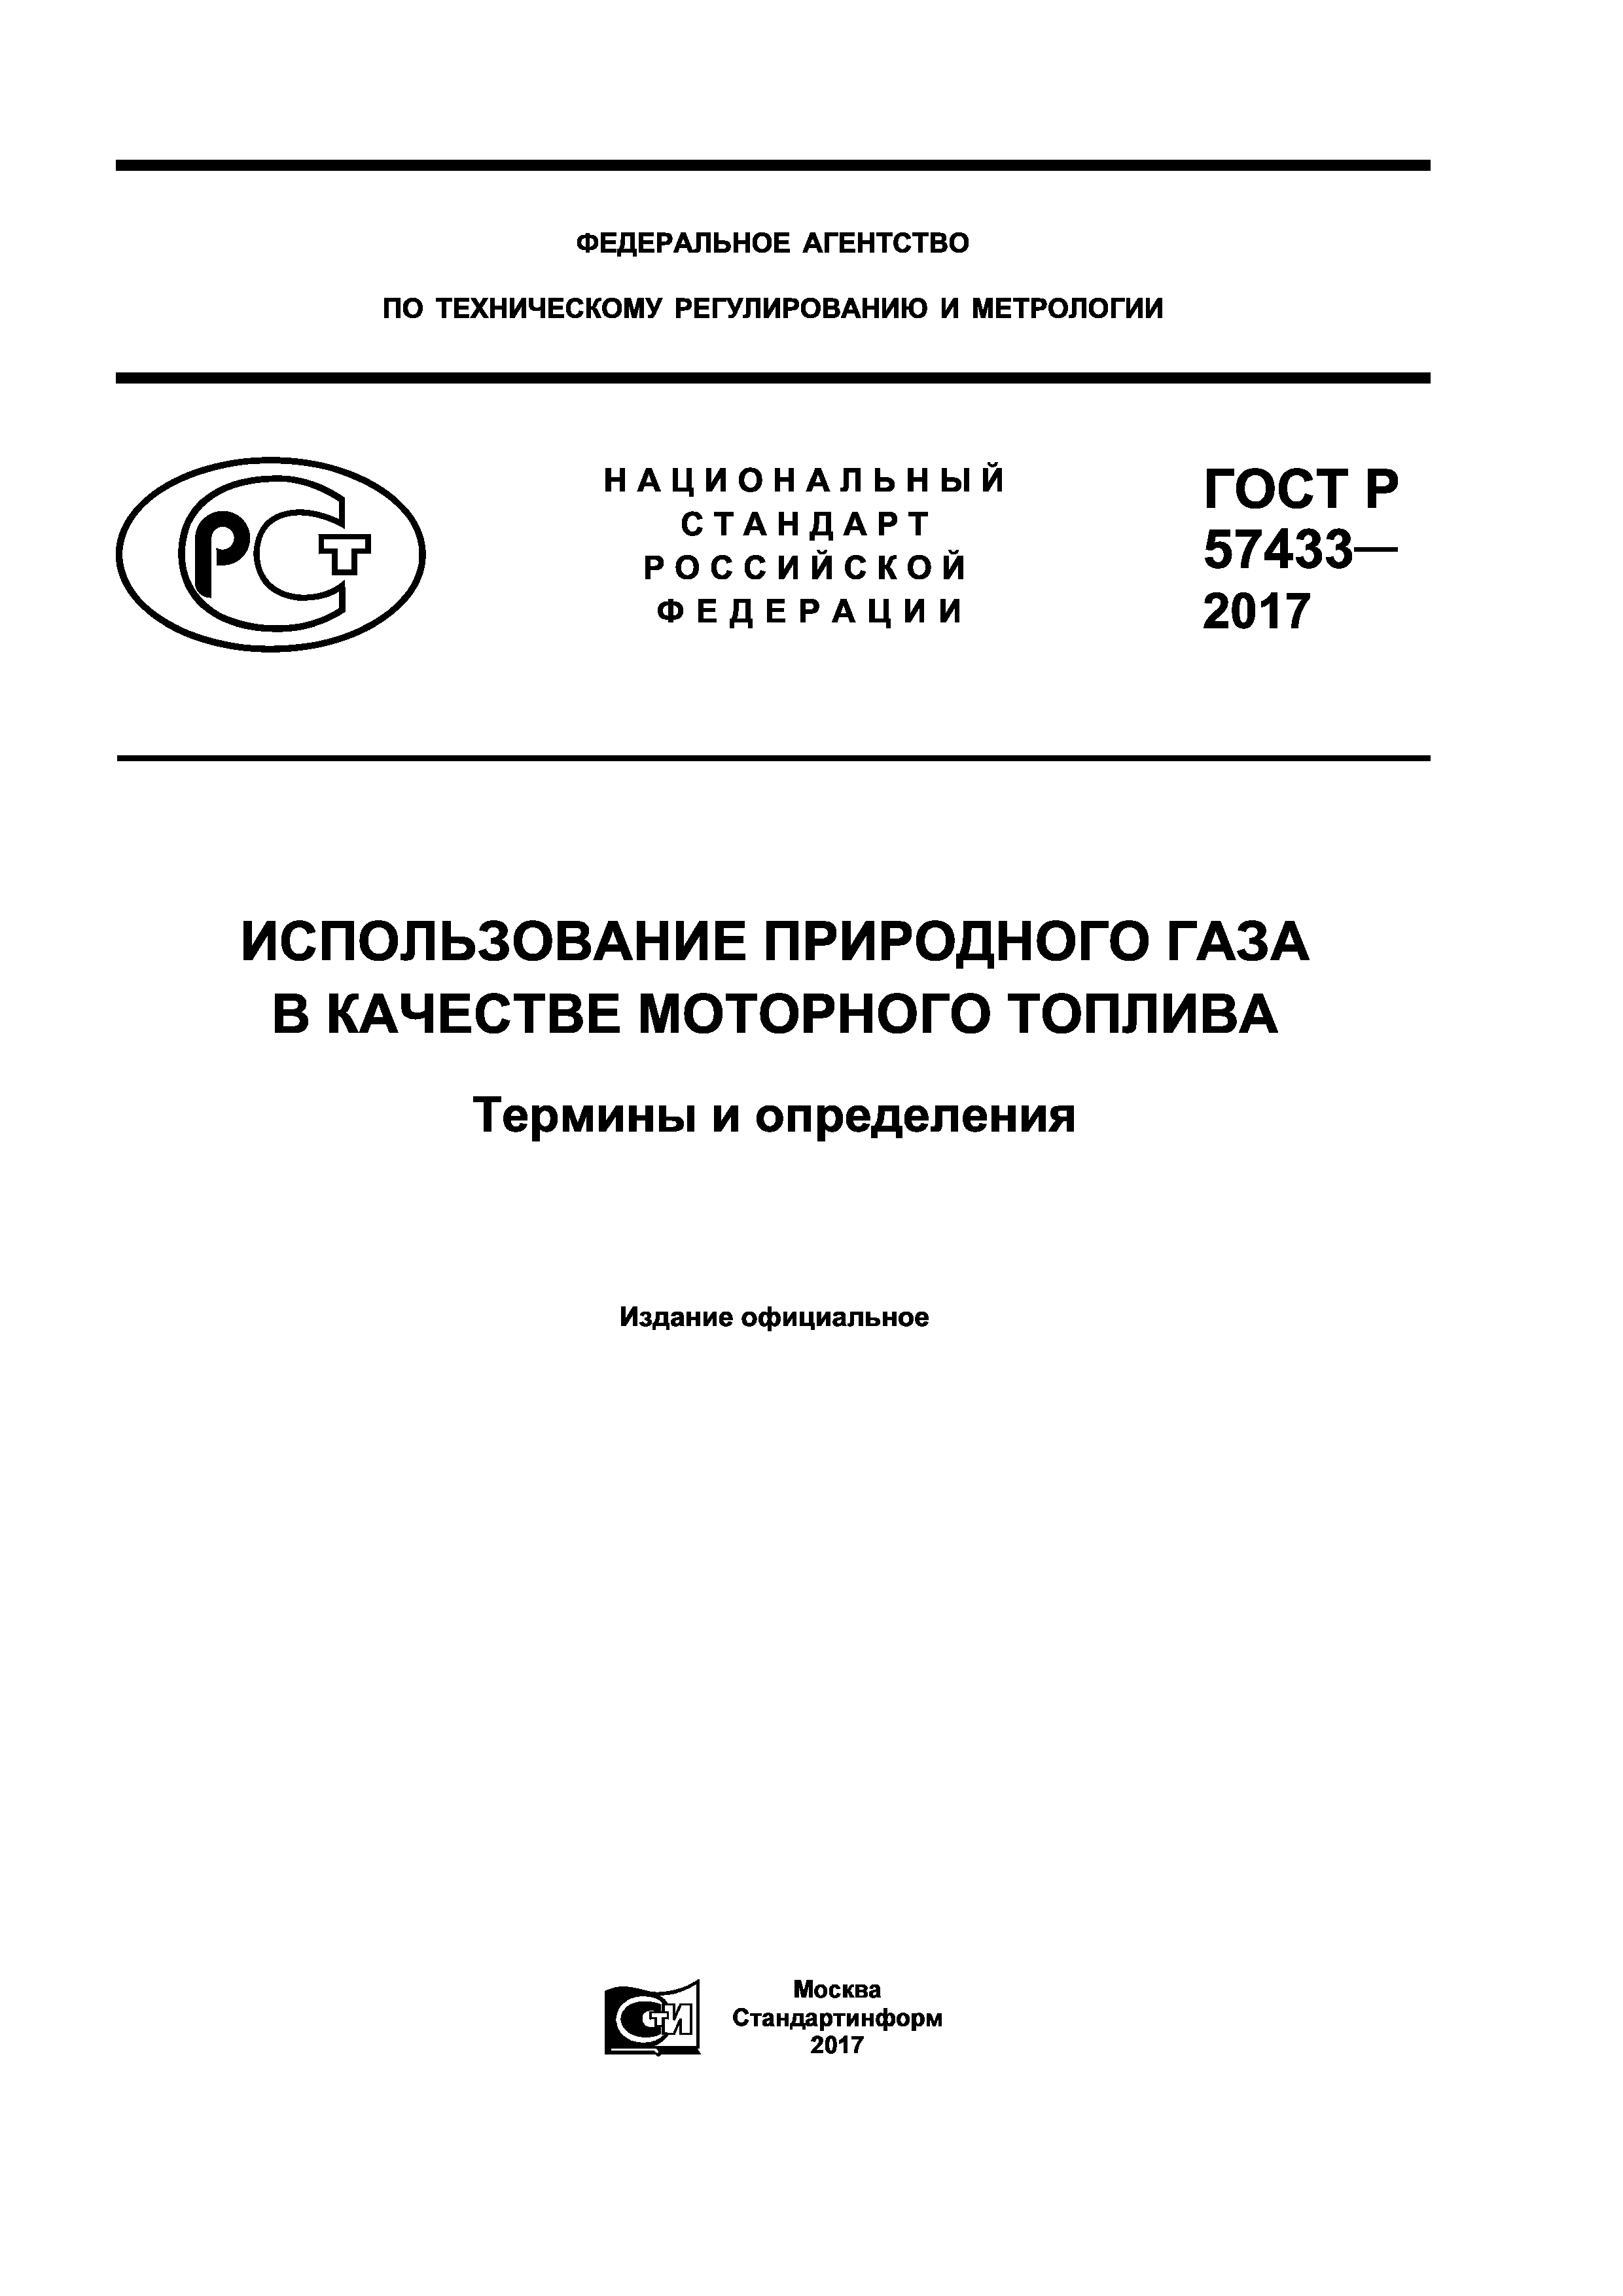 ГОСТ Р 57433-2017